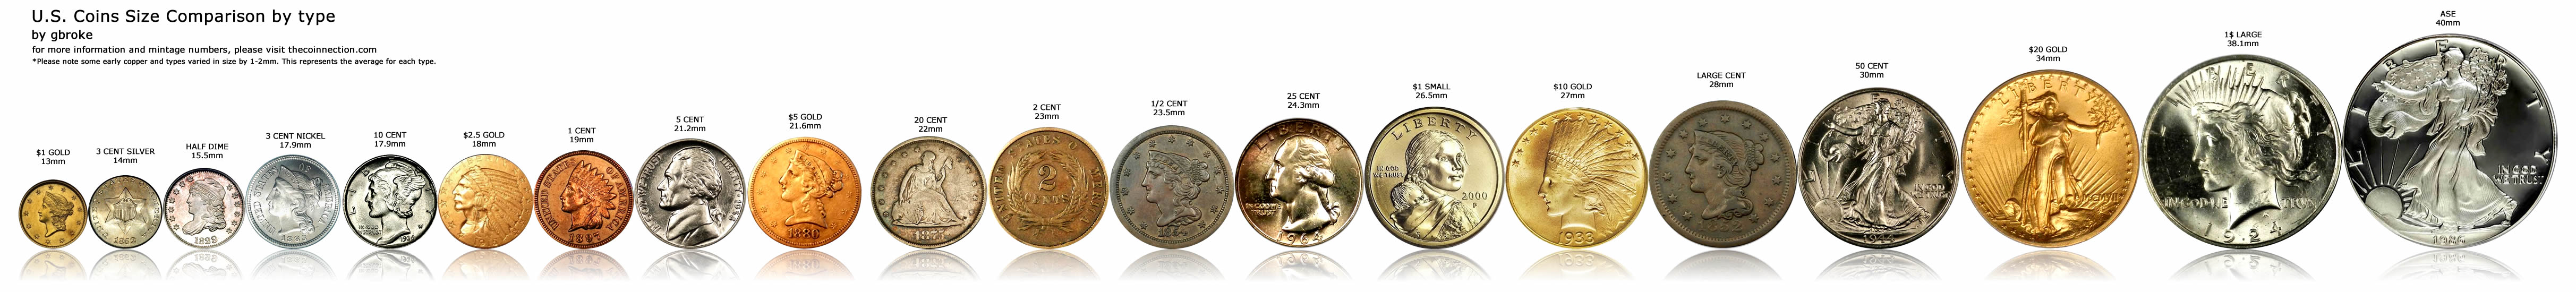 8 ton в рублях. Диаметр монет. Цент доллара монета. Монета диаметром 1.5 см. Размер монет США.